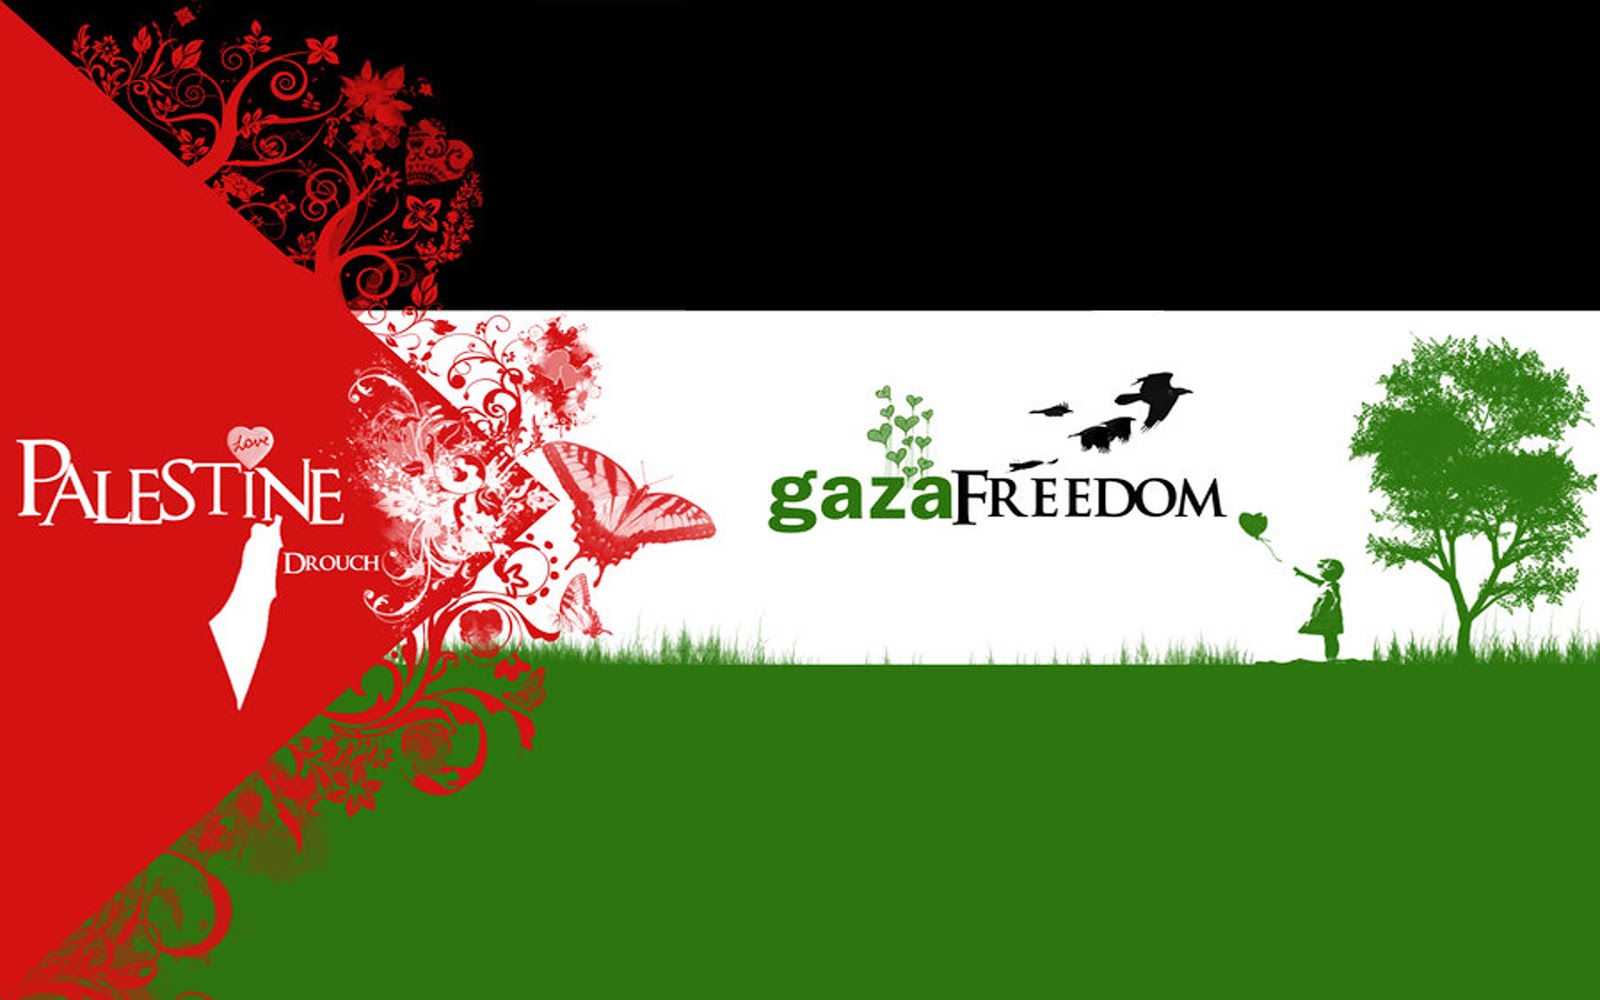 HD Wallpaper Palestine Dom Gaza